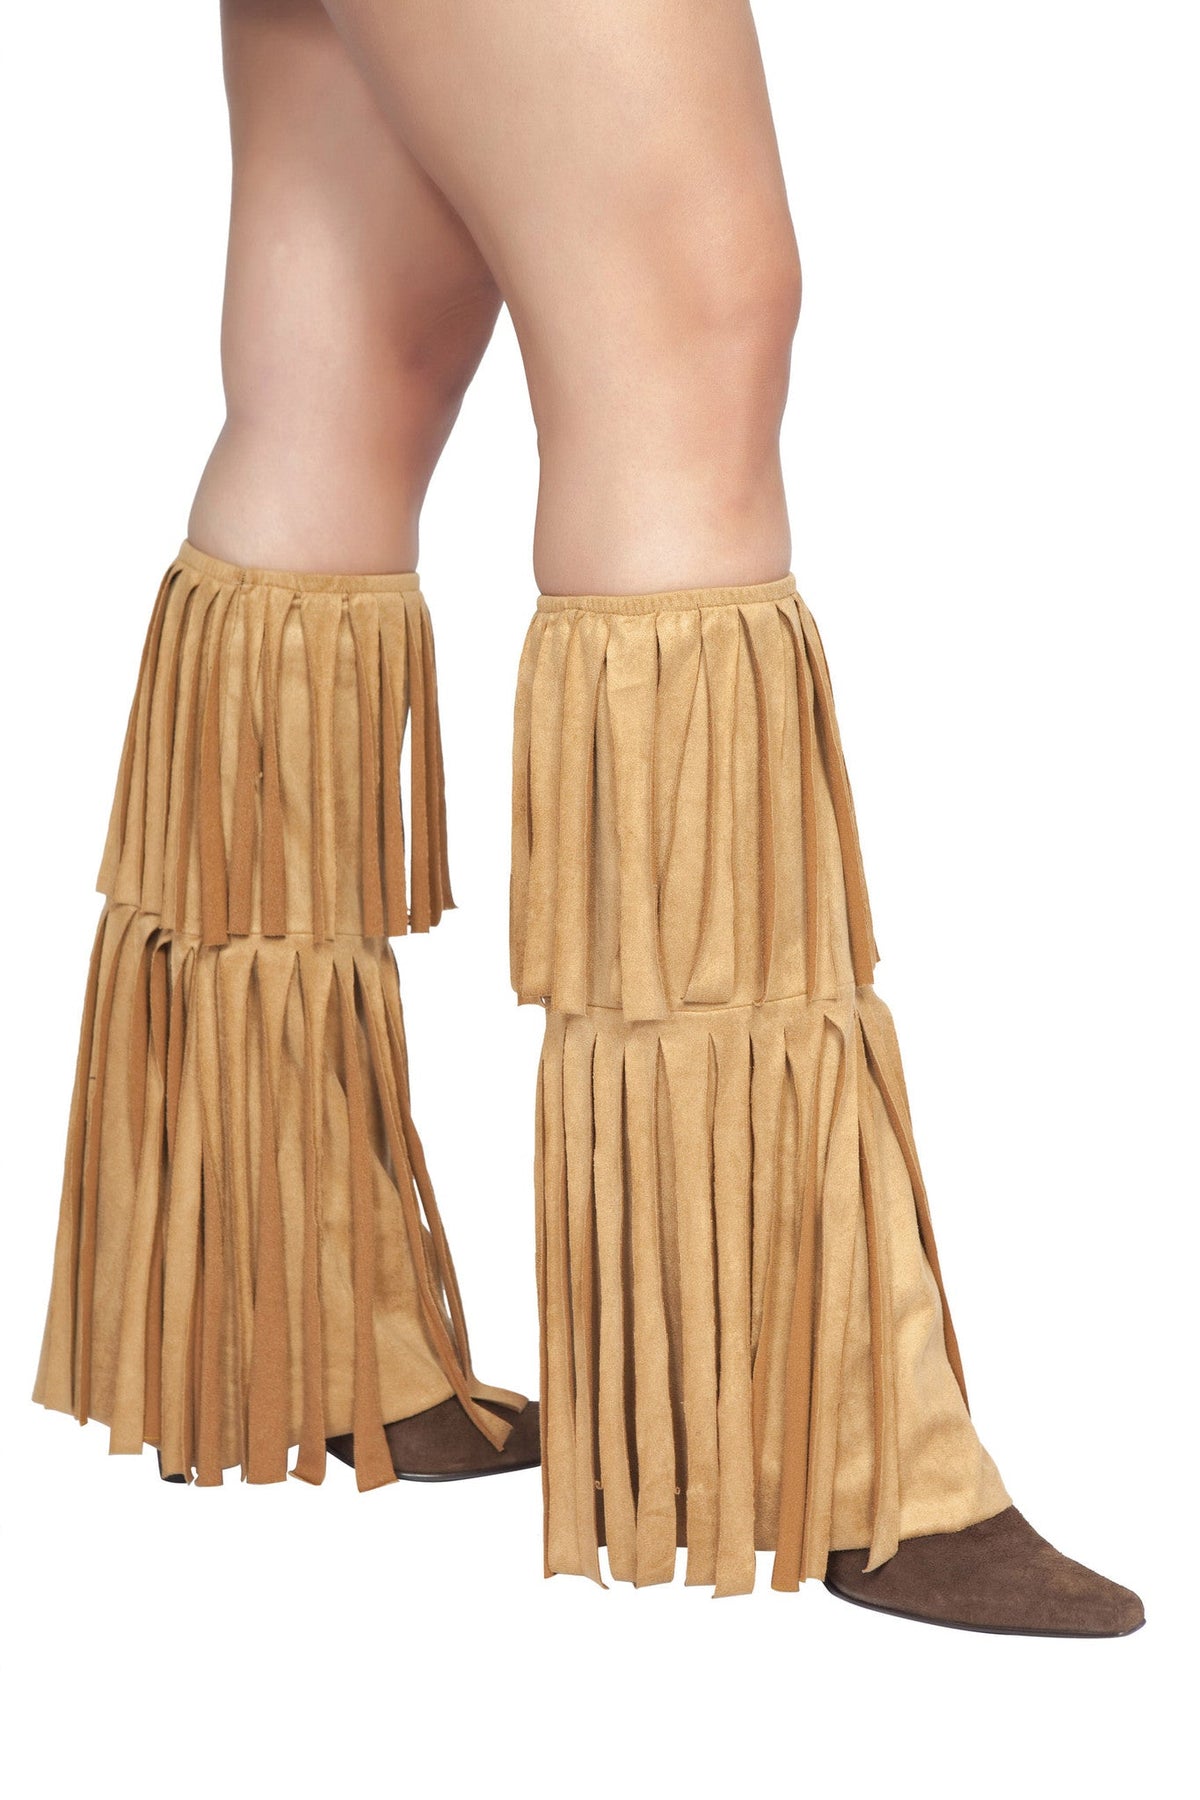 Fringed Leg Warmers - Costume Accessory-Roma Costume